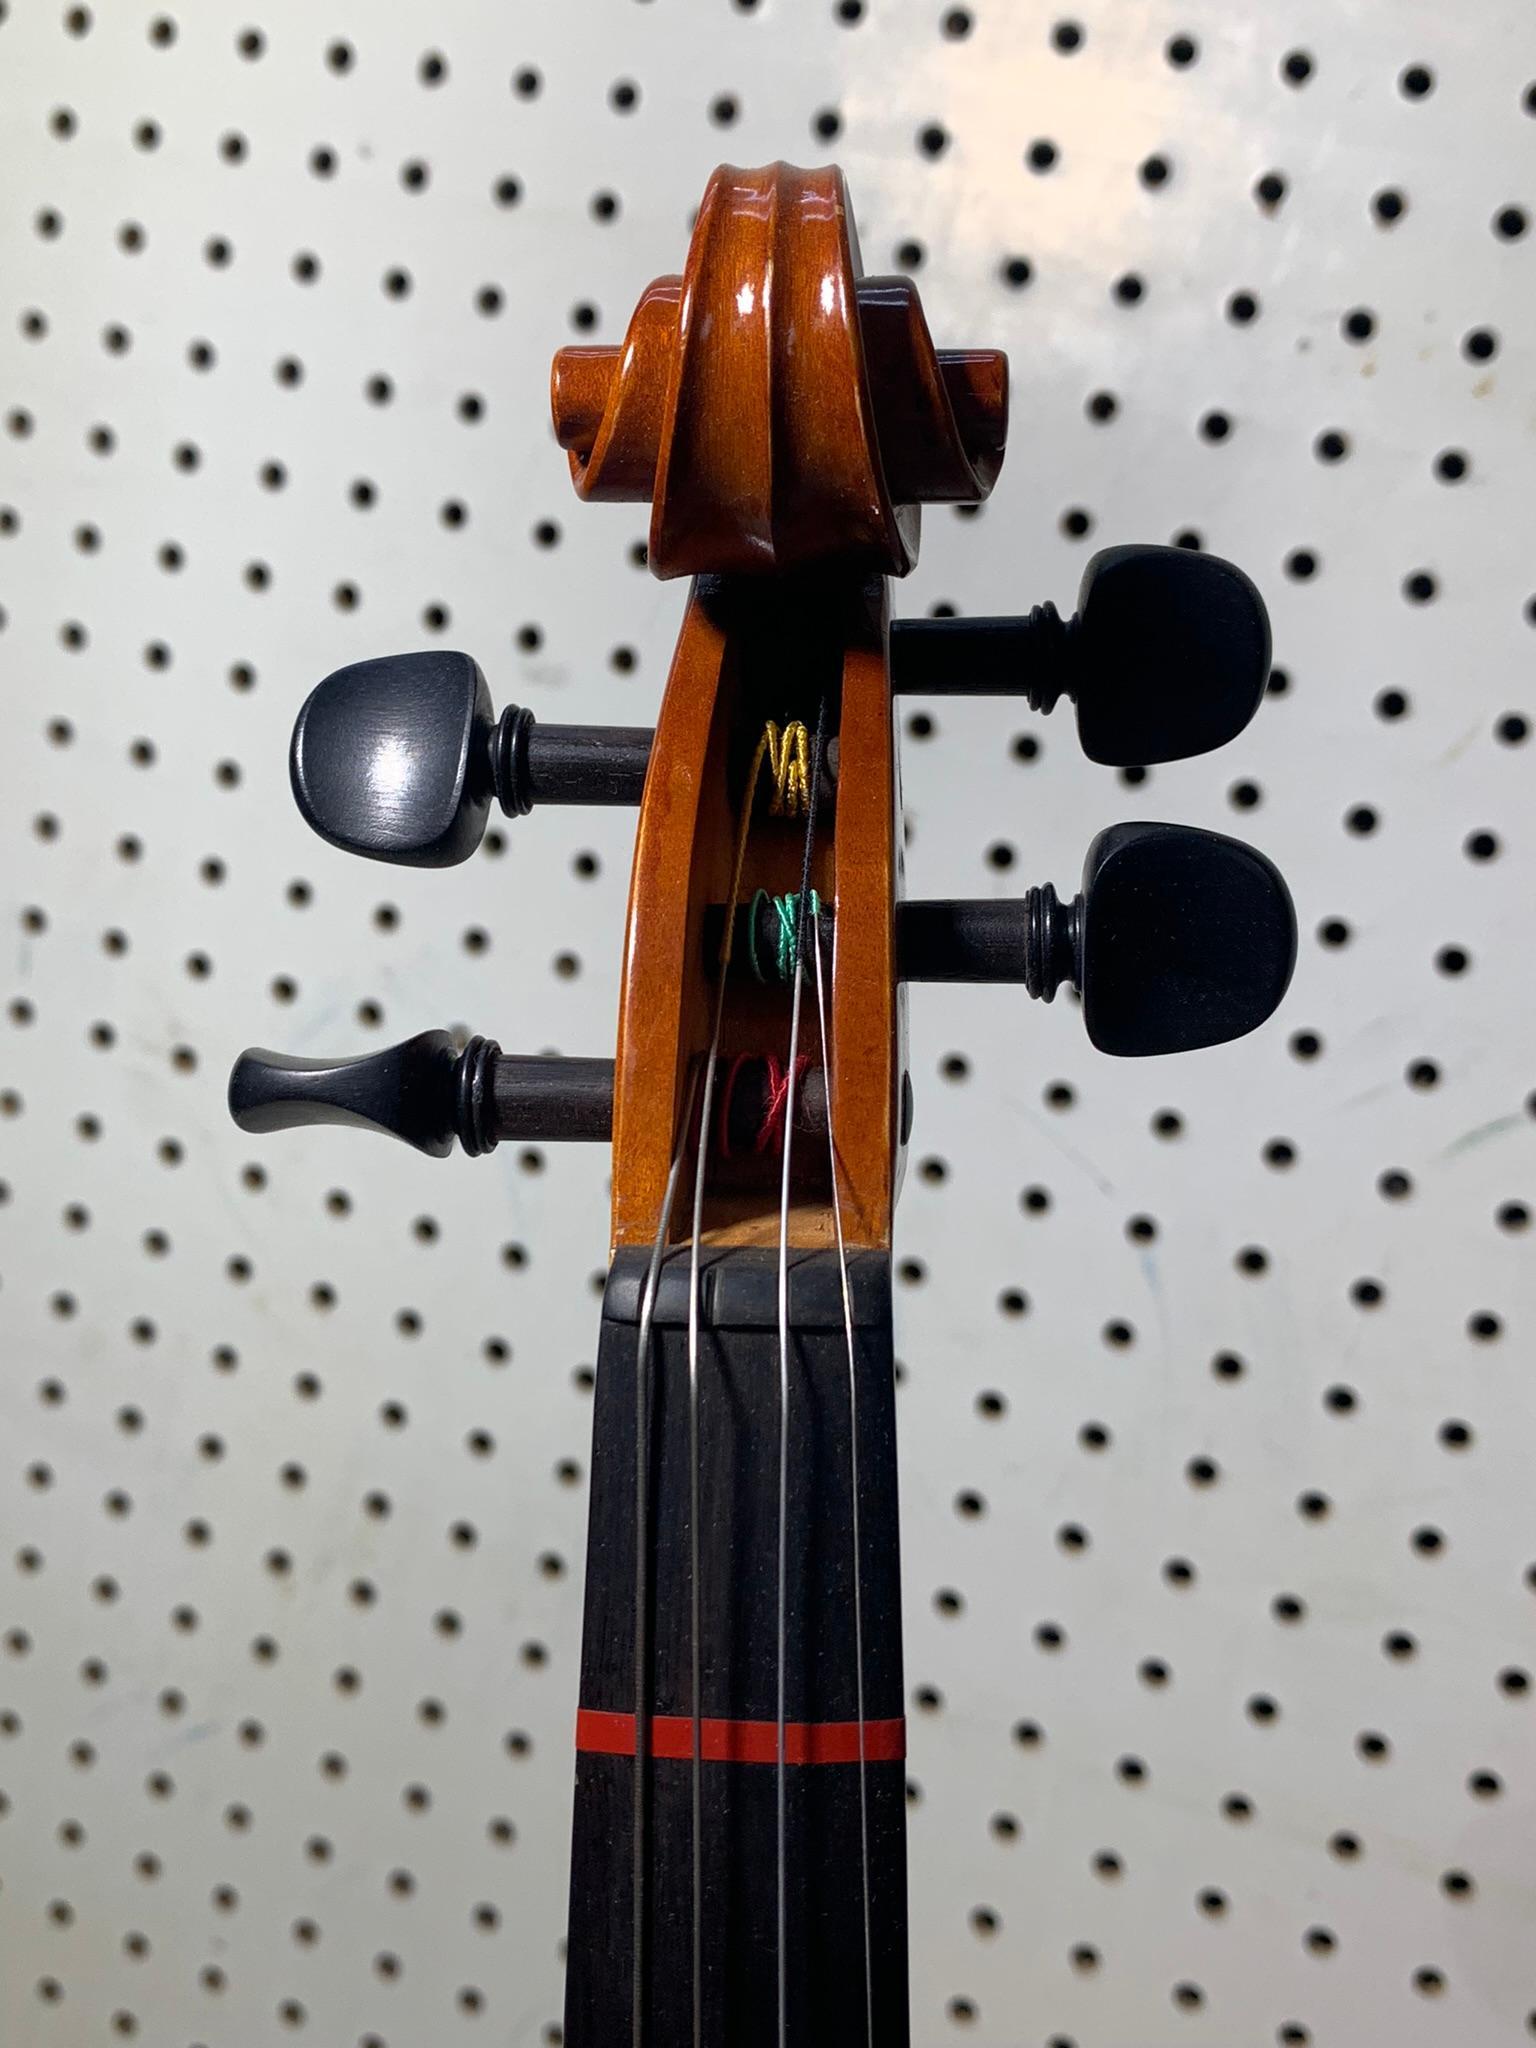 Johannes Kohr K400 Violin with Case